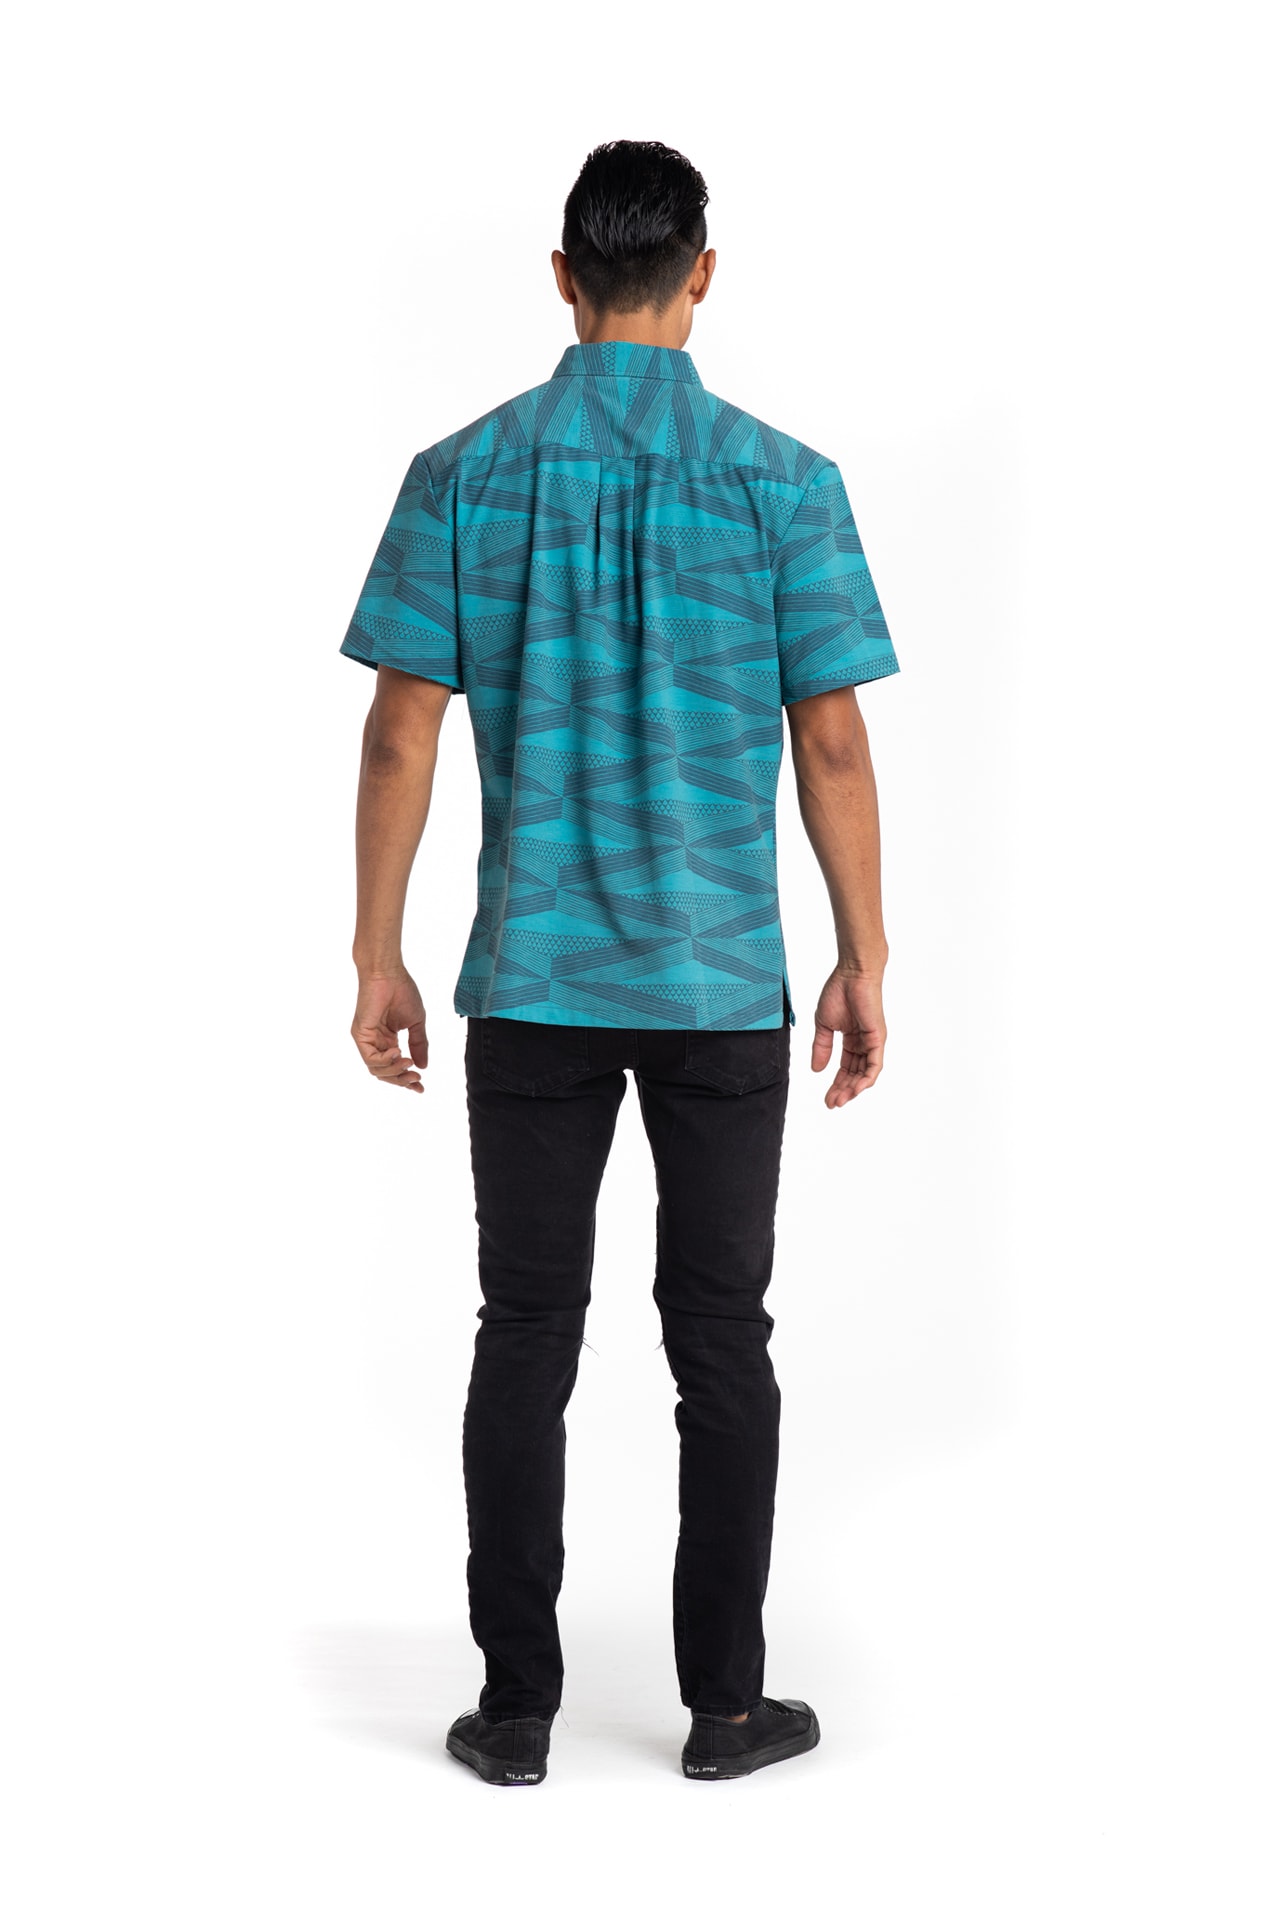 Male model wearing Mahalo Nui Shirt in Atlantic Blue - Back View